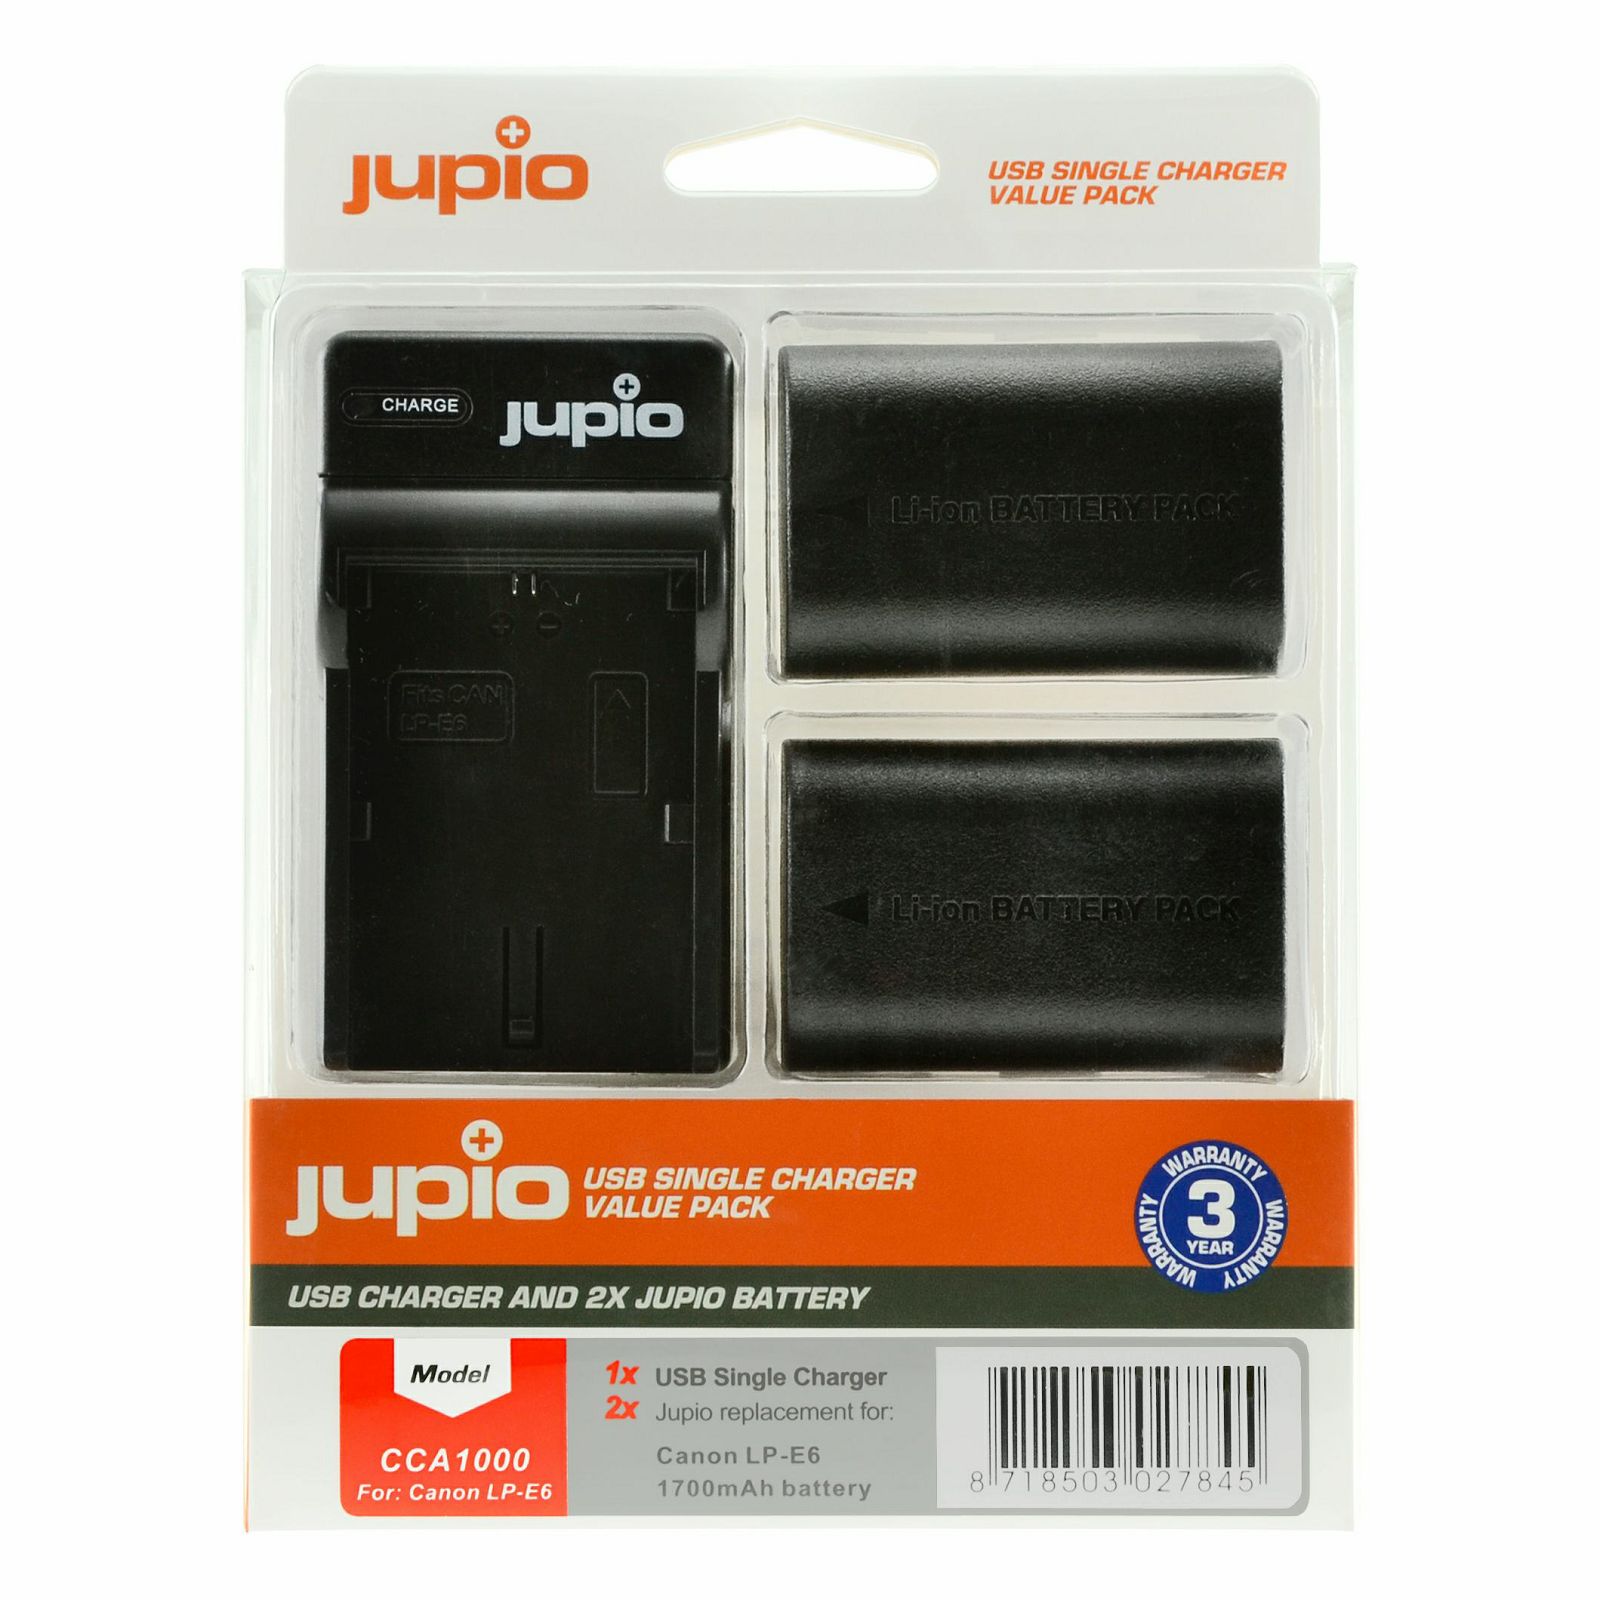 Jupio KIT 2x Battery LP-E6 1700mAh + USB Single Charger komplet punjač i dvije baterije za Canon 5D IV, 5D III, 7D II, 80D, 70D, 6D, 60D CCA1000